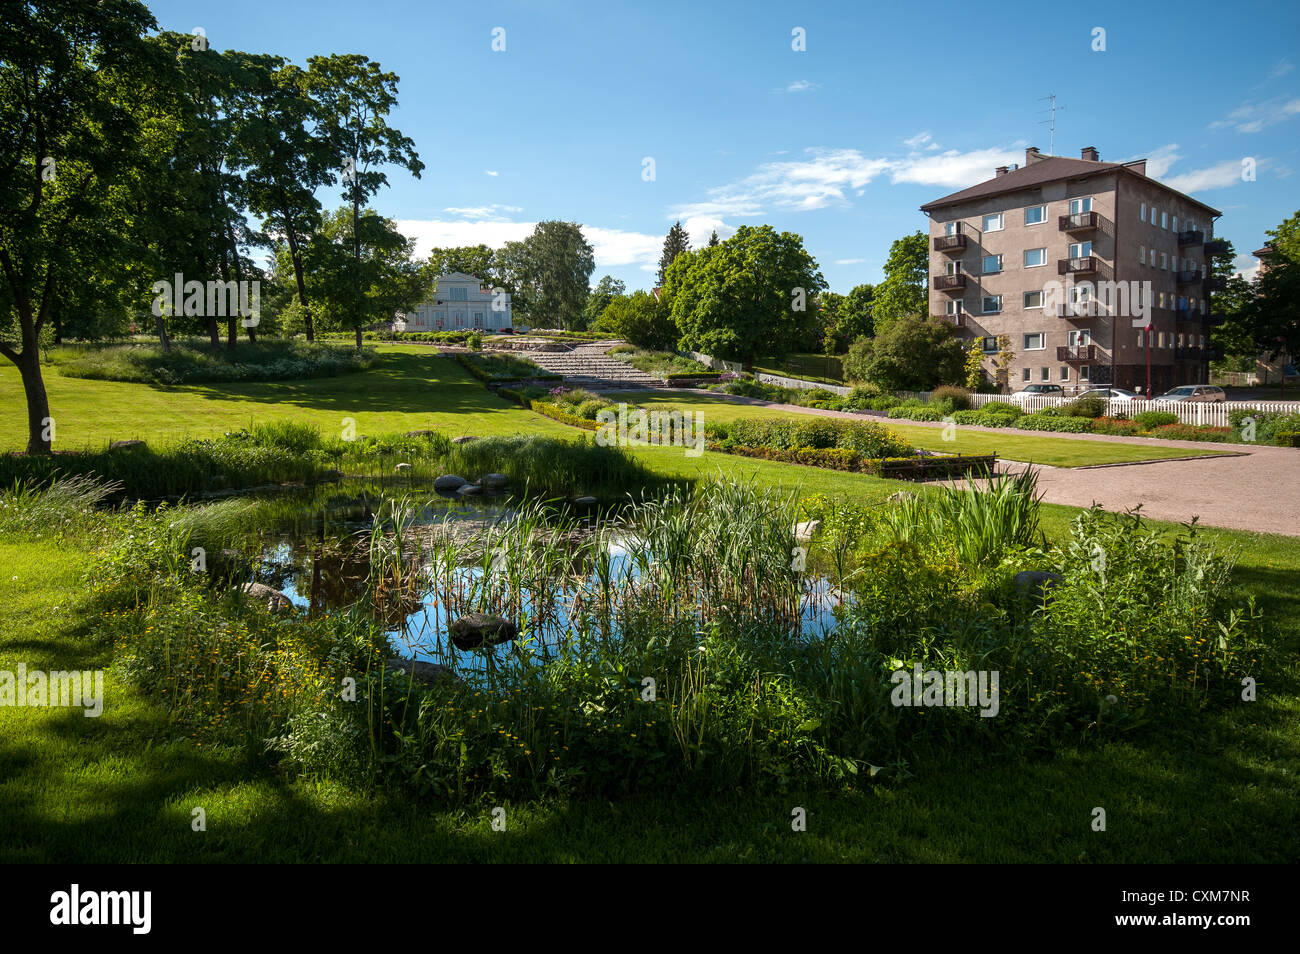 Annala Gärten in Arabien, Helsinki, Finnland Stockfoto